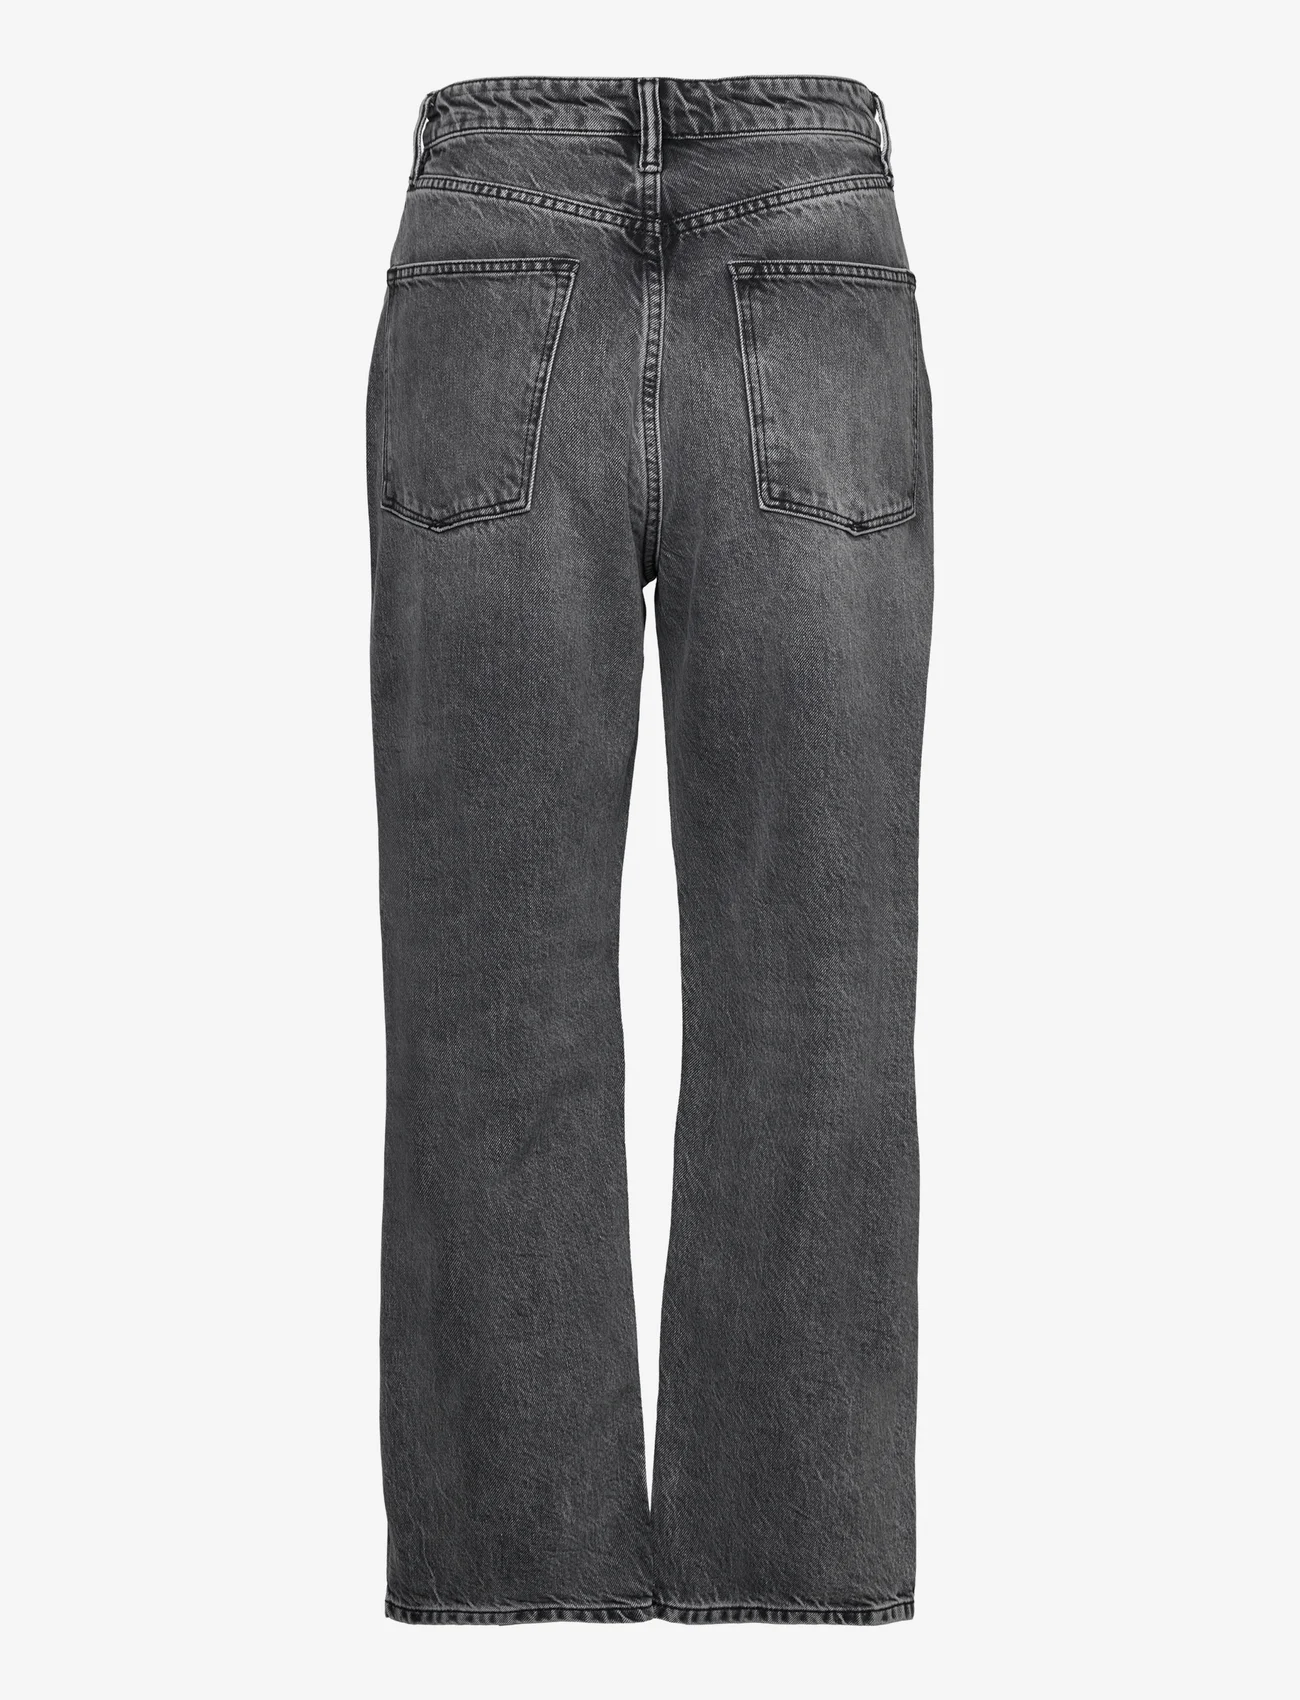 AllSaints - ZOEY JEAN - brede jeans - washed black - 1